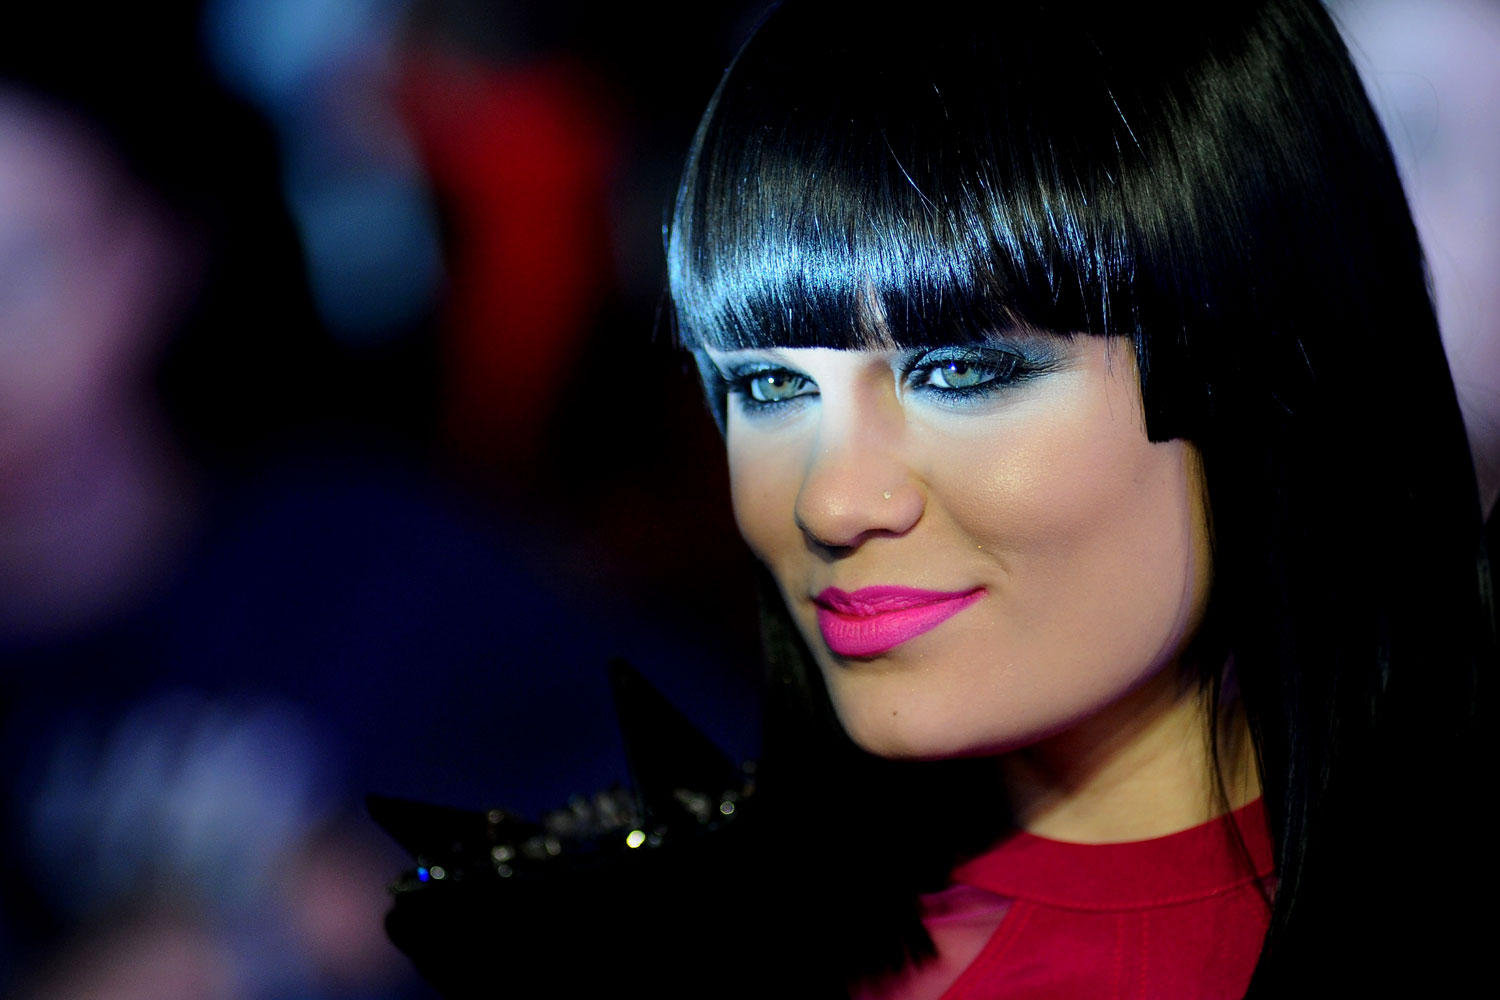 afowzocelebstar: Jessie J Shows Her ‘Price Tag’ To ‘The Late Late Show’1500 x 1000